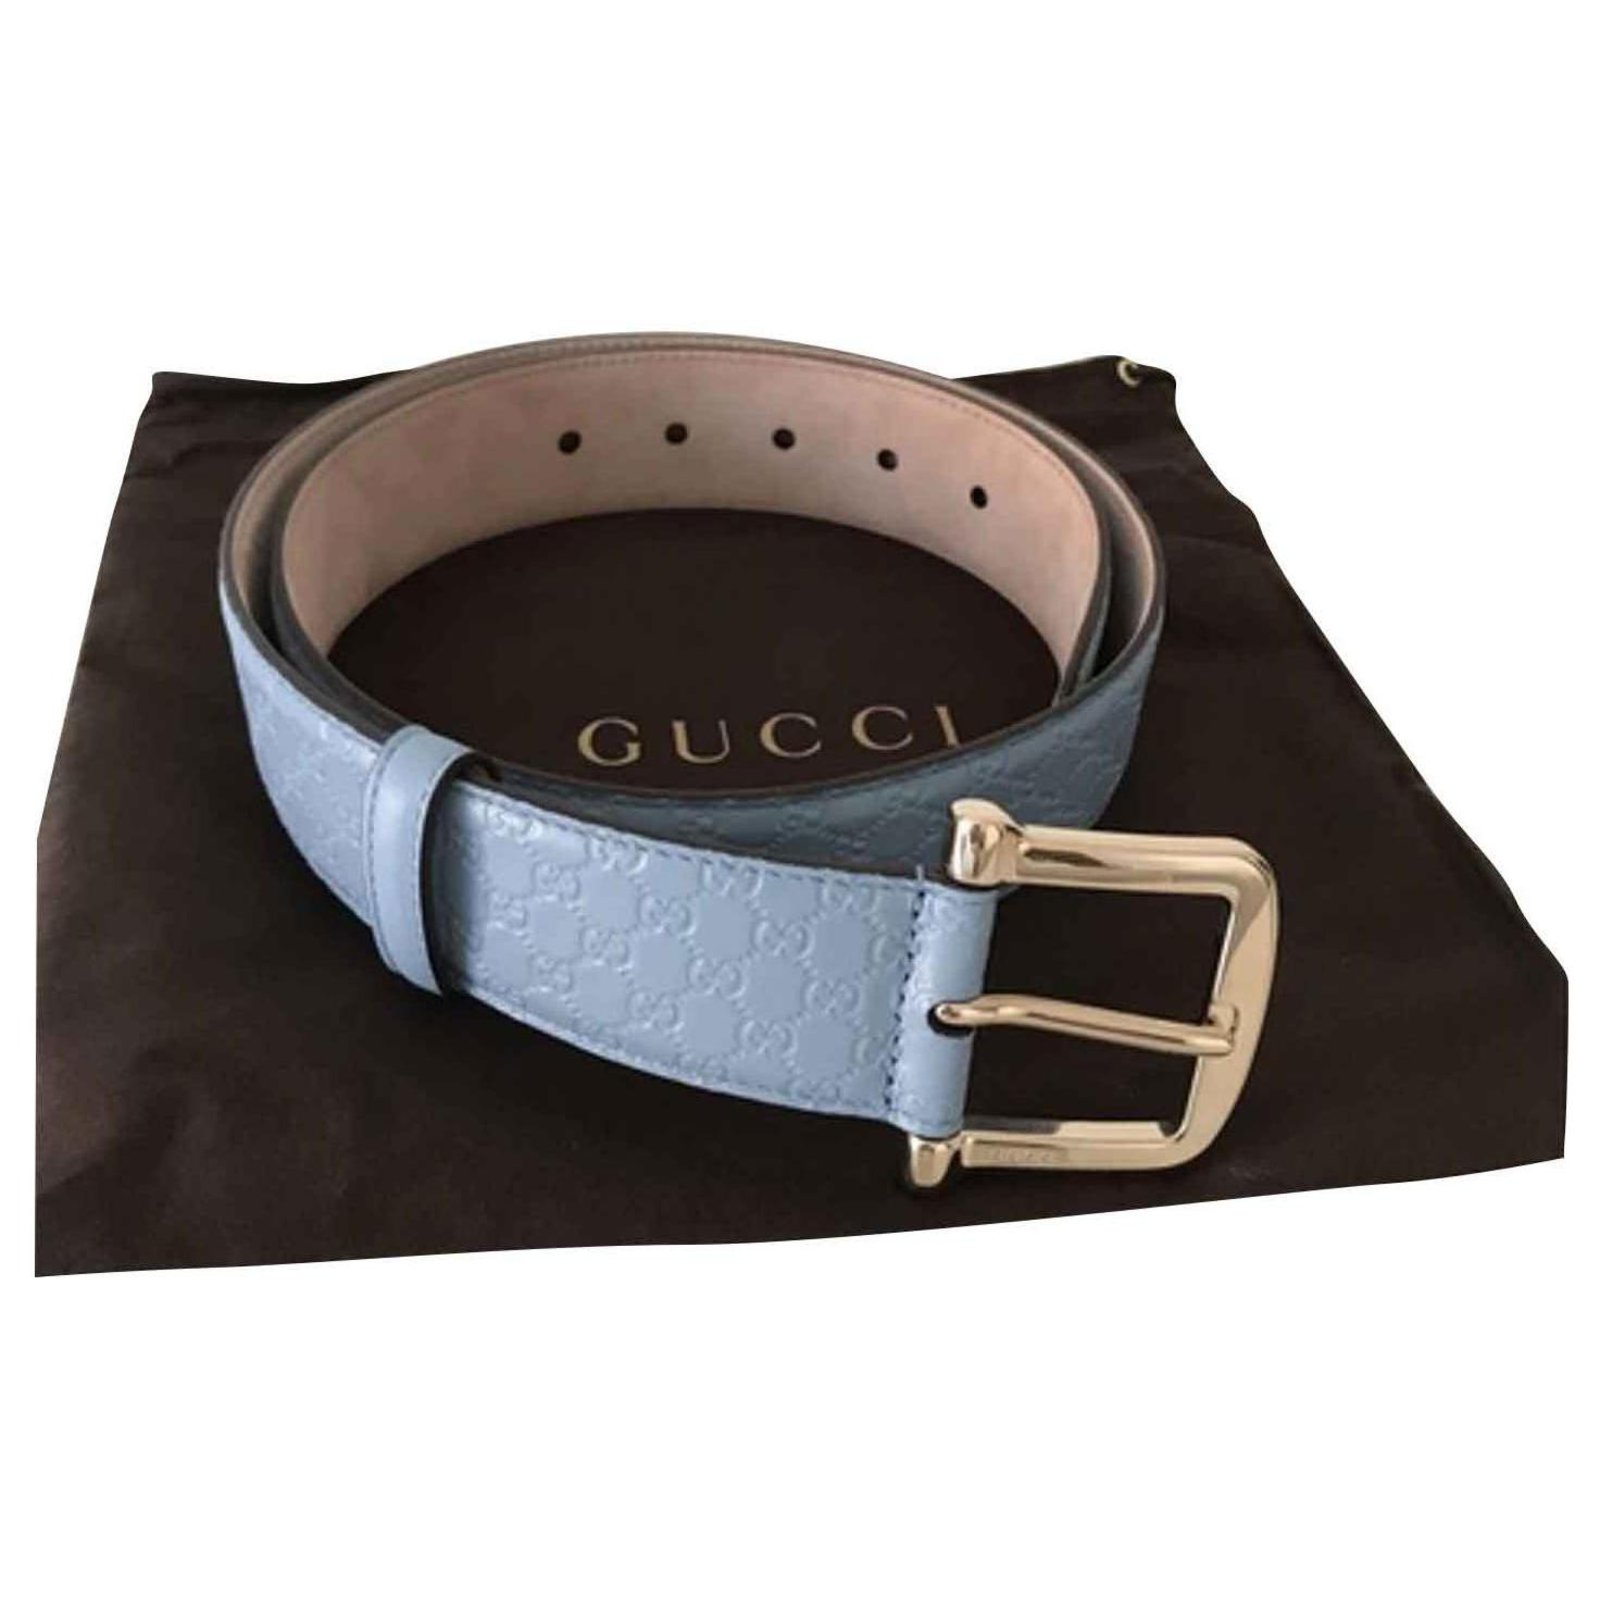 belts like gucci belt